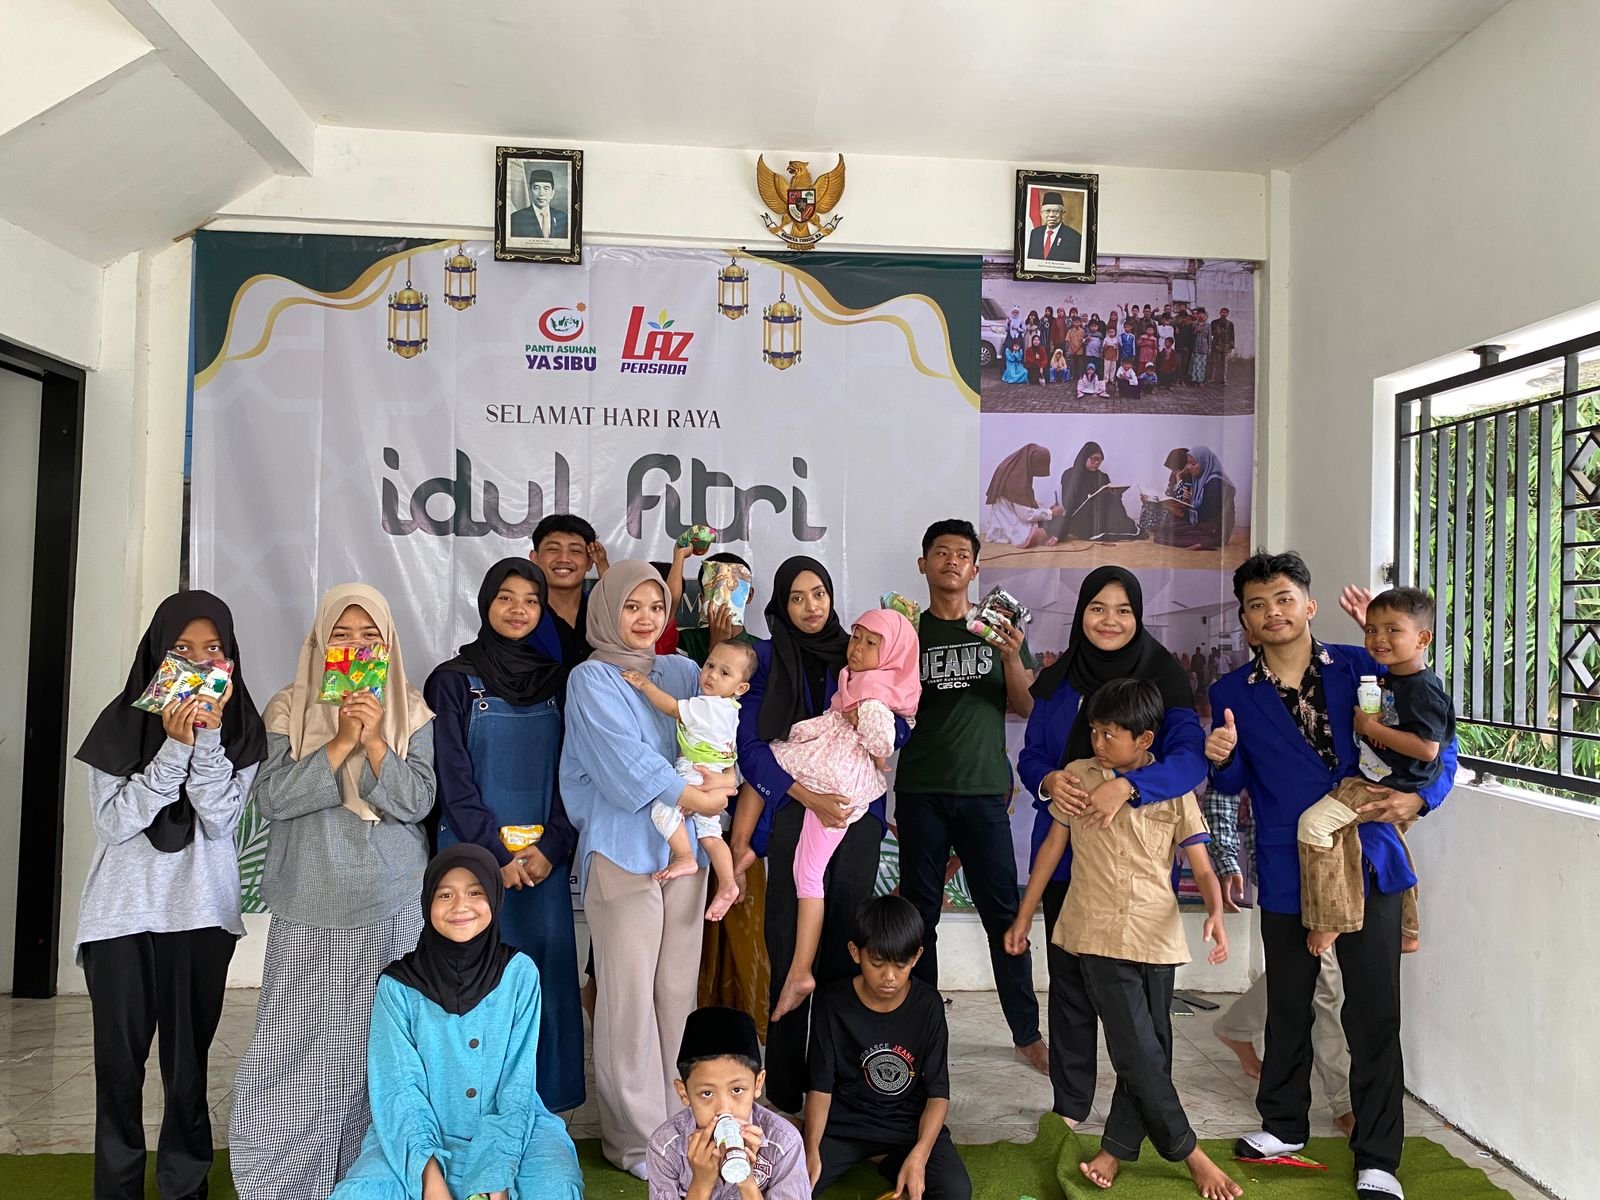 Sosialisasi Minat dan Bakat Bagi Anak- Anak di Panti Asuhan Yasibu, Kota Malang